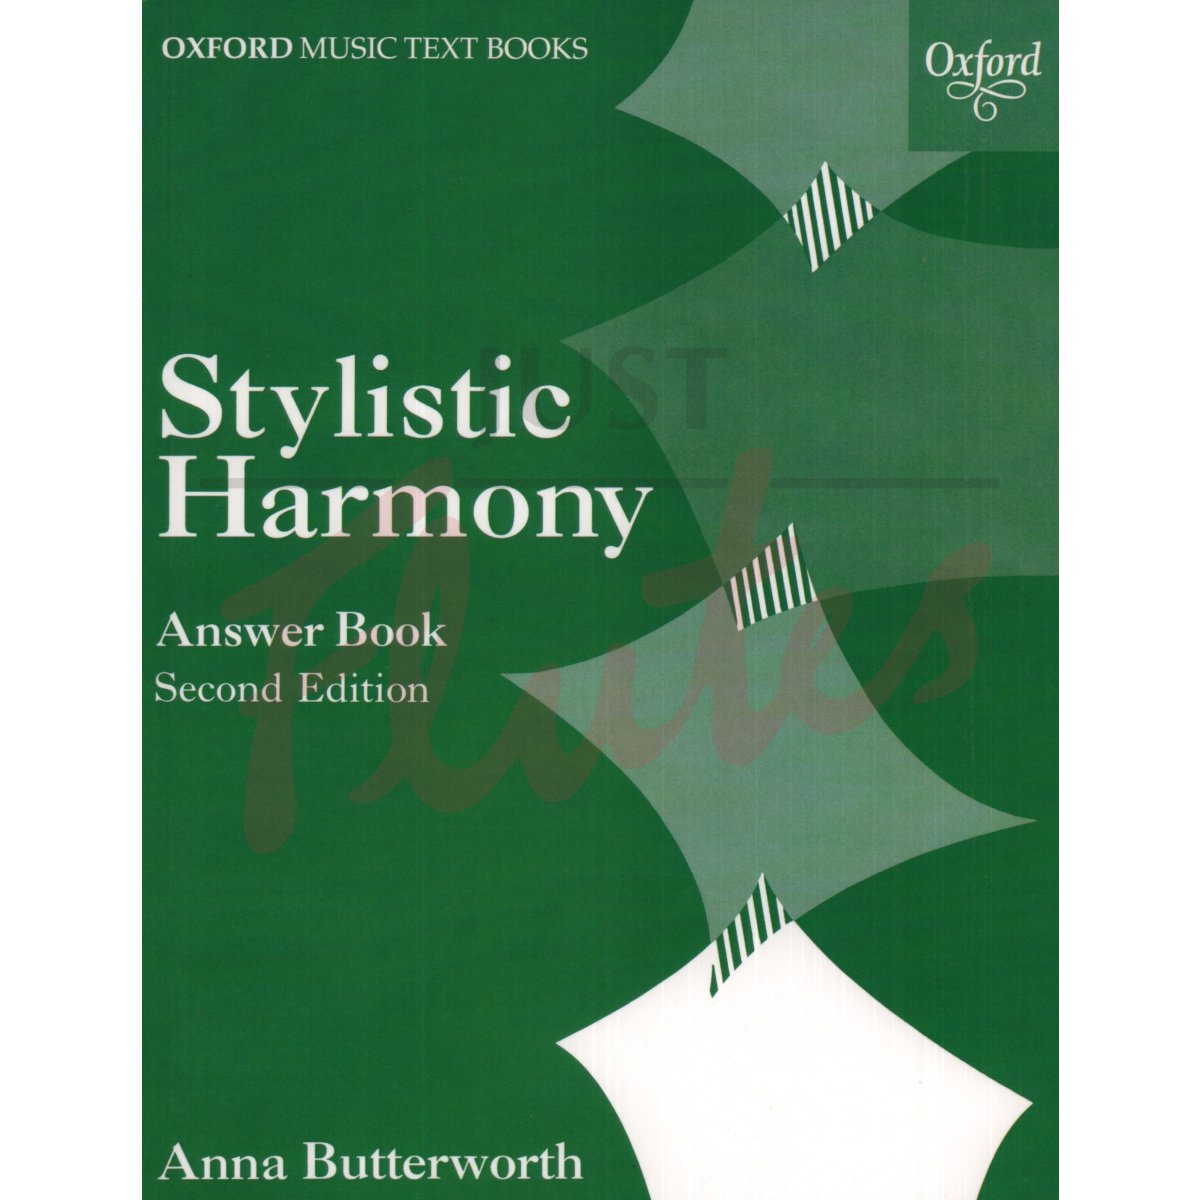 Stylistic Harmony [Answer Book]